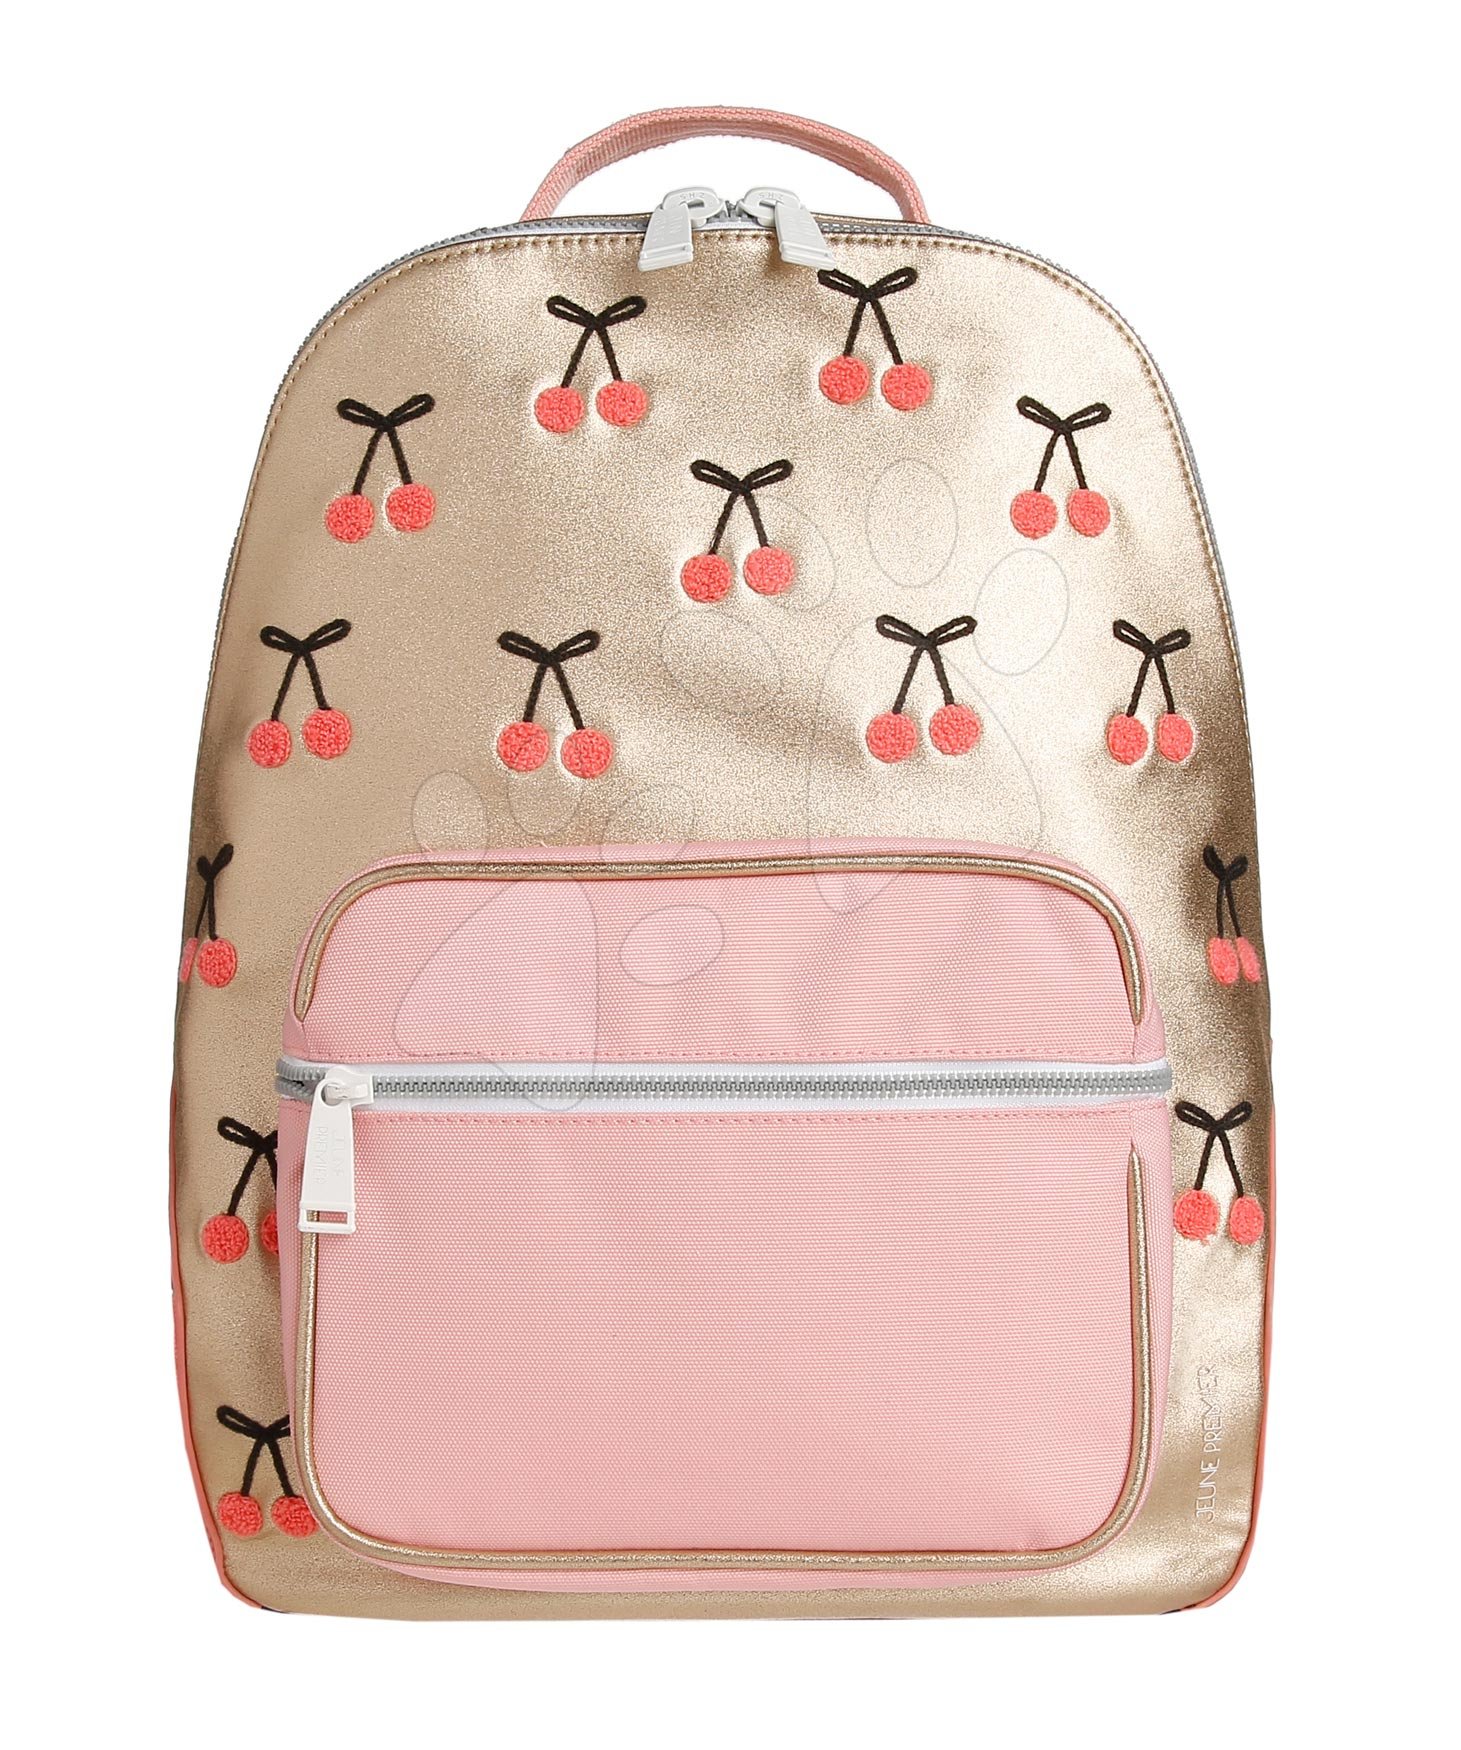 Školské tašky a batohy - Školská taška batoh Backpack Bobbie Cherry Pompon Jeune Premier ergonomický luxusné prevedenie 41*30 cm